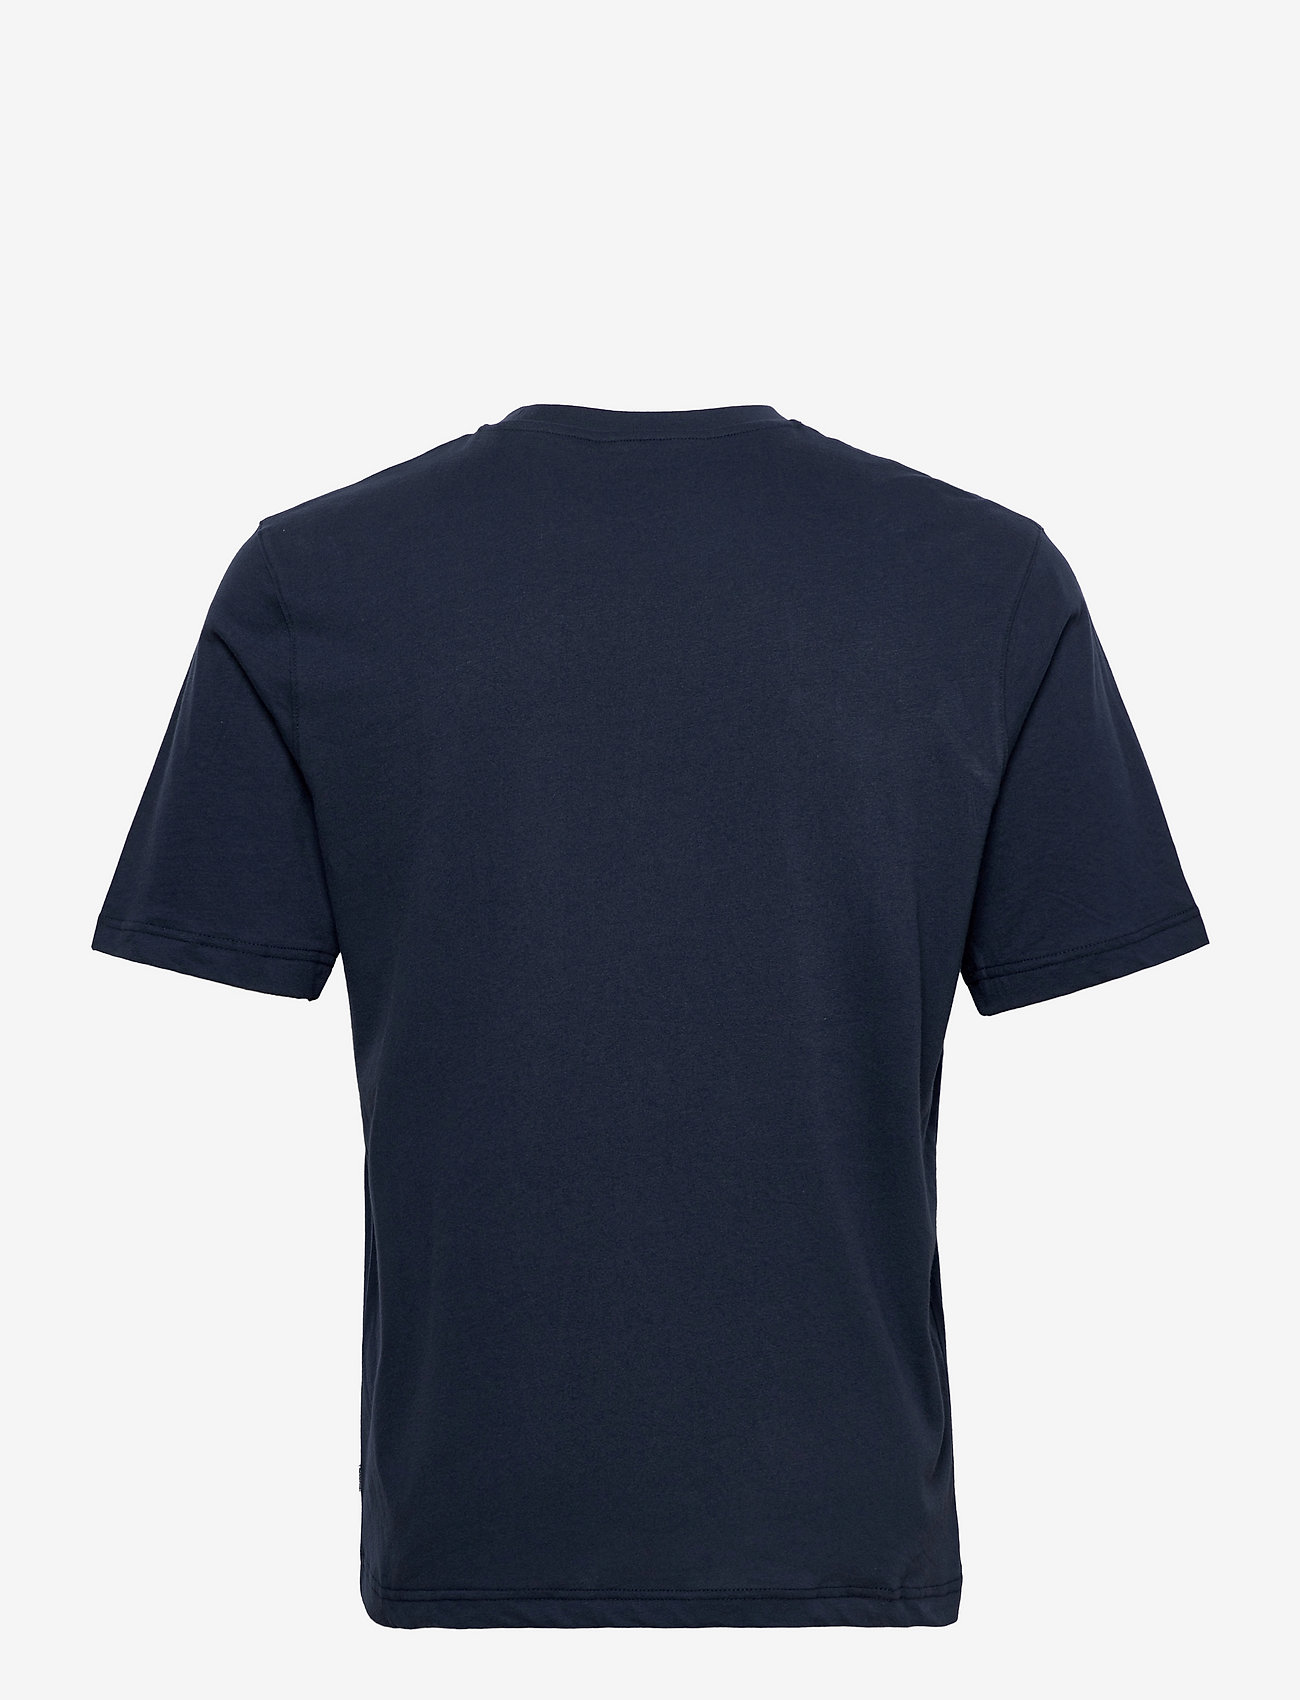 Resteröds - Mid sleeve Tee - t-shirts - navy - 1